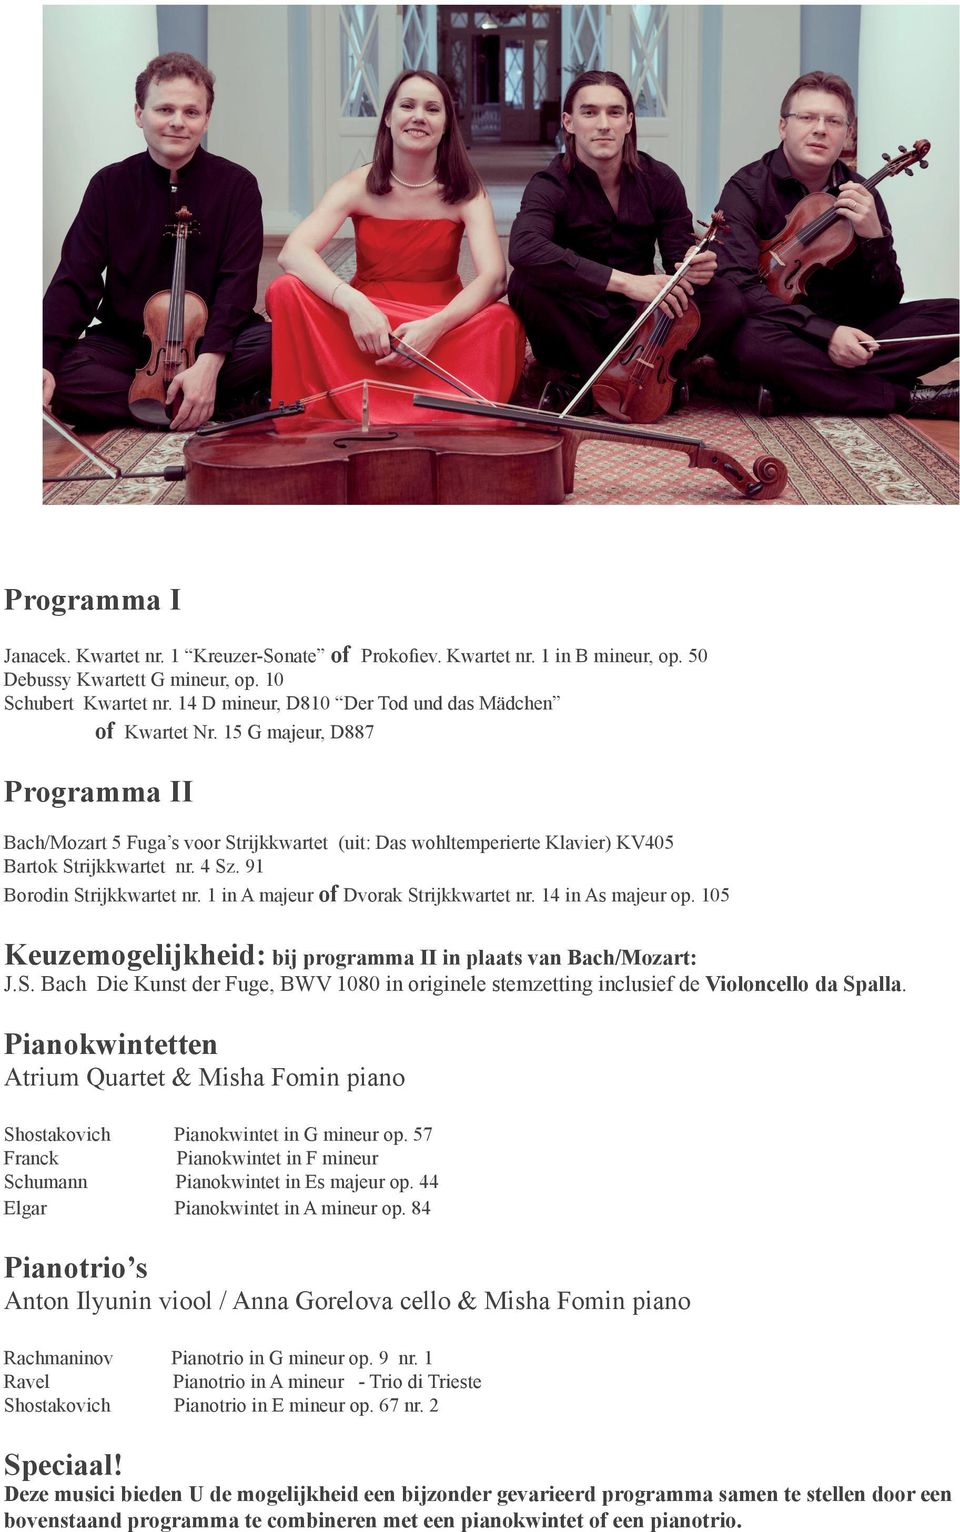 91 Borodin Strijkkwartet nr. 1 in A majeur of Dvorak Strijkkwartet nr. 14 in As majeur op. 105 Keuzemogelijkheid: bij programma II in plaats van Bach/Mozart: J.S. Bach Die Kunst der Fuge, BWV 1080 in originele stemzetting inclusief de Violoncello da Spalla.